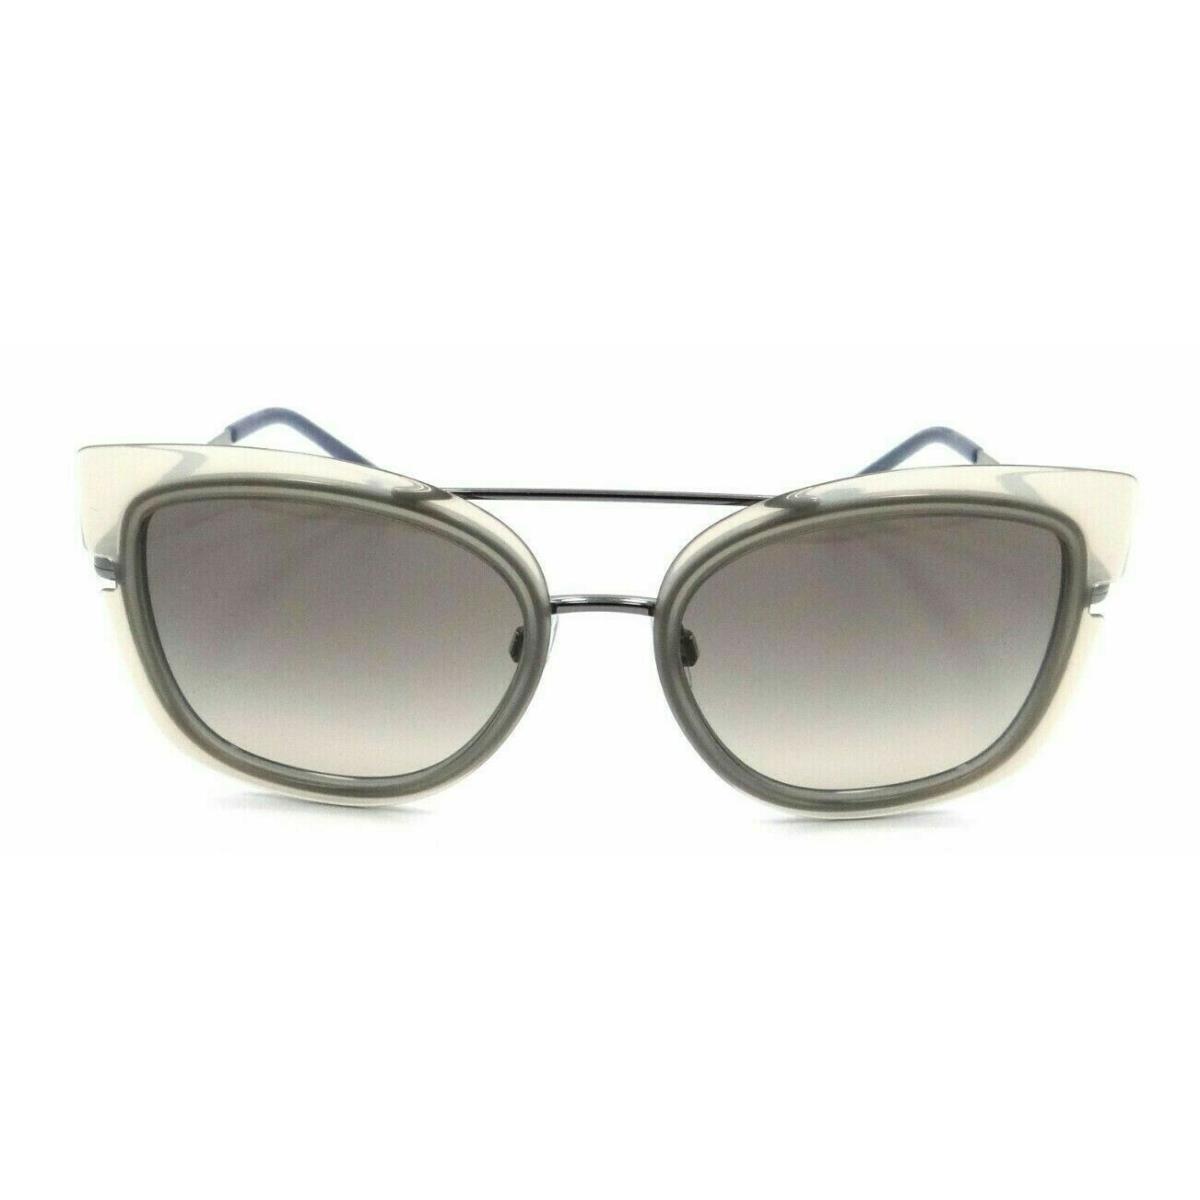 Giorgio Armani Sunglasses AR6090 301013 Beige Azure Frames 54mm ST